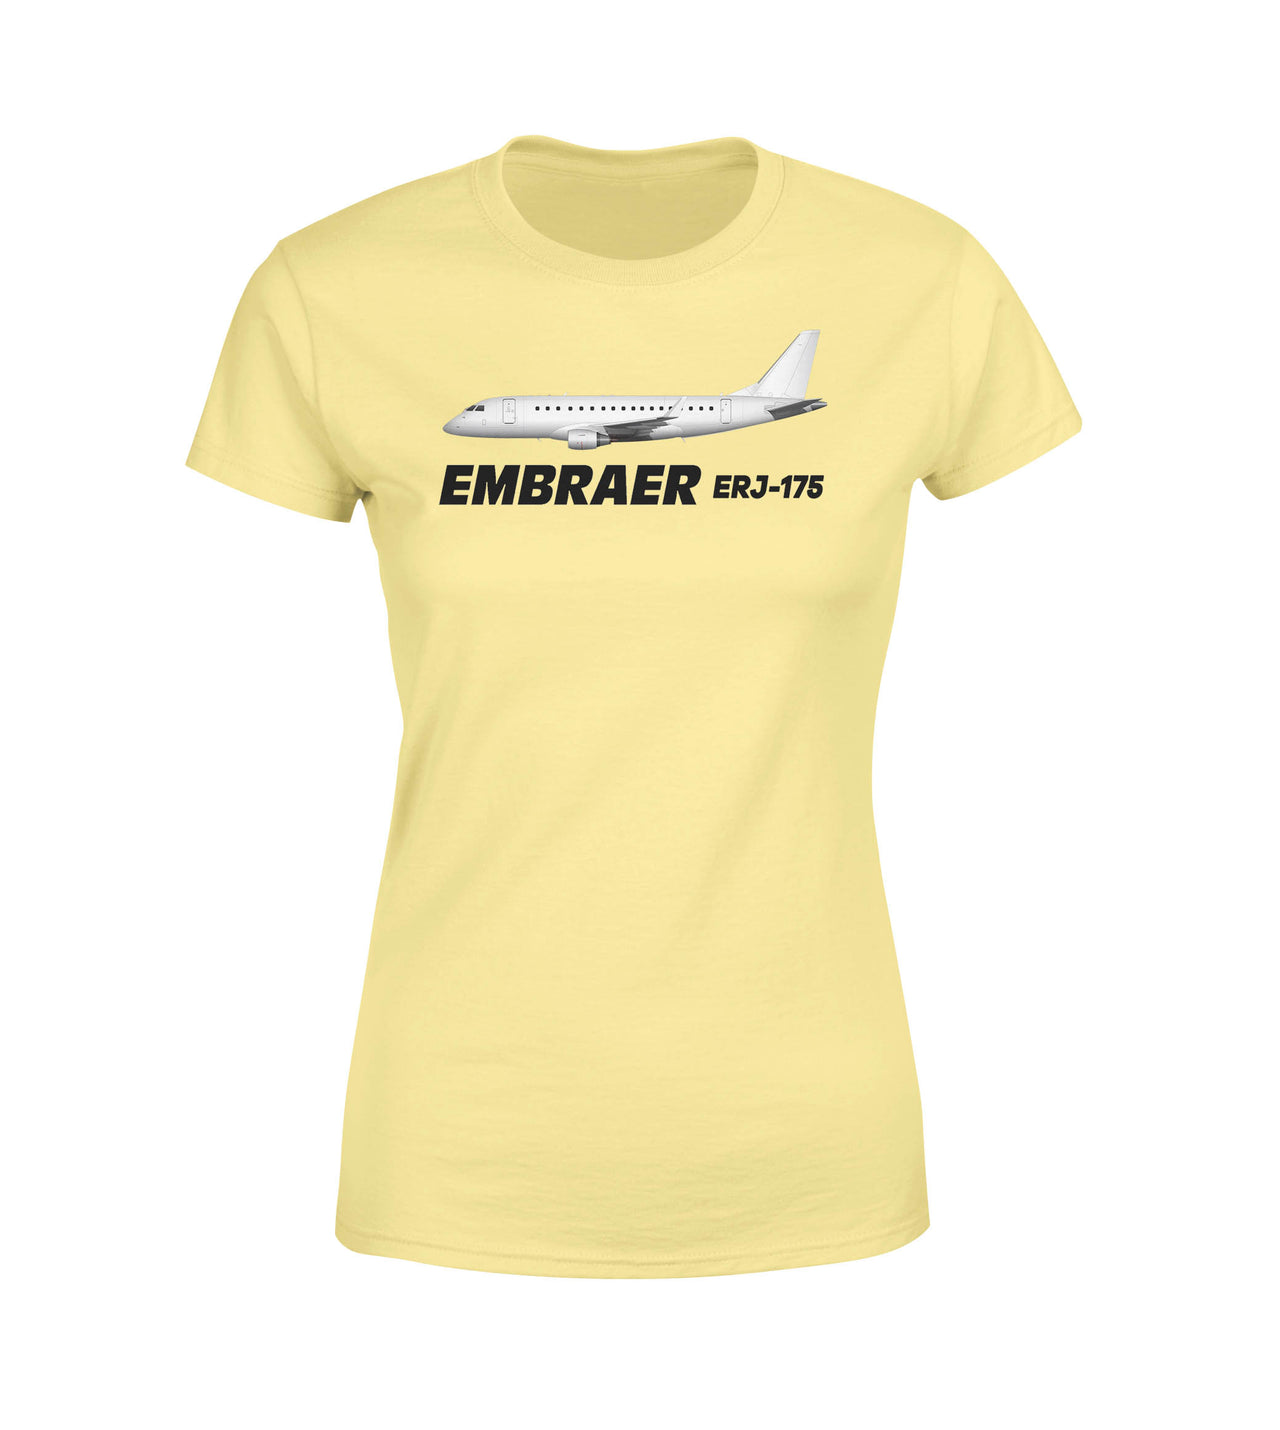 The Embraer ERJ-175 Designed Women T-Shirts